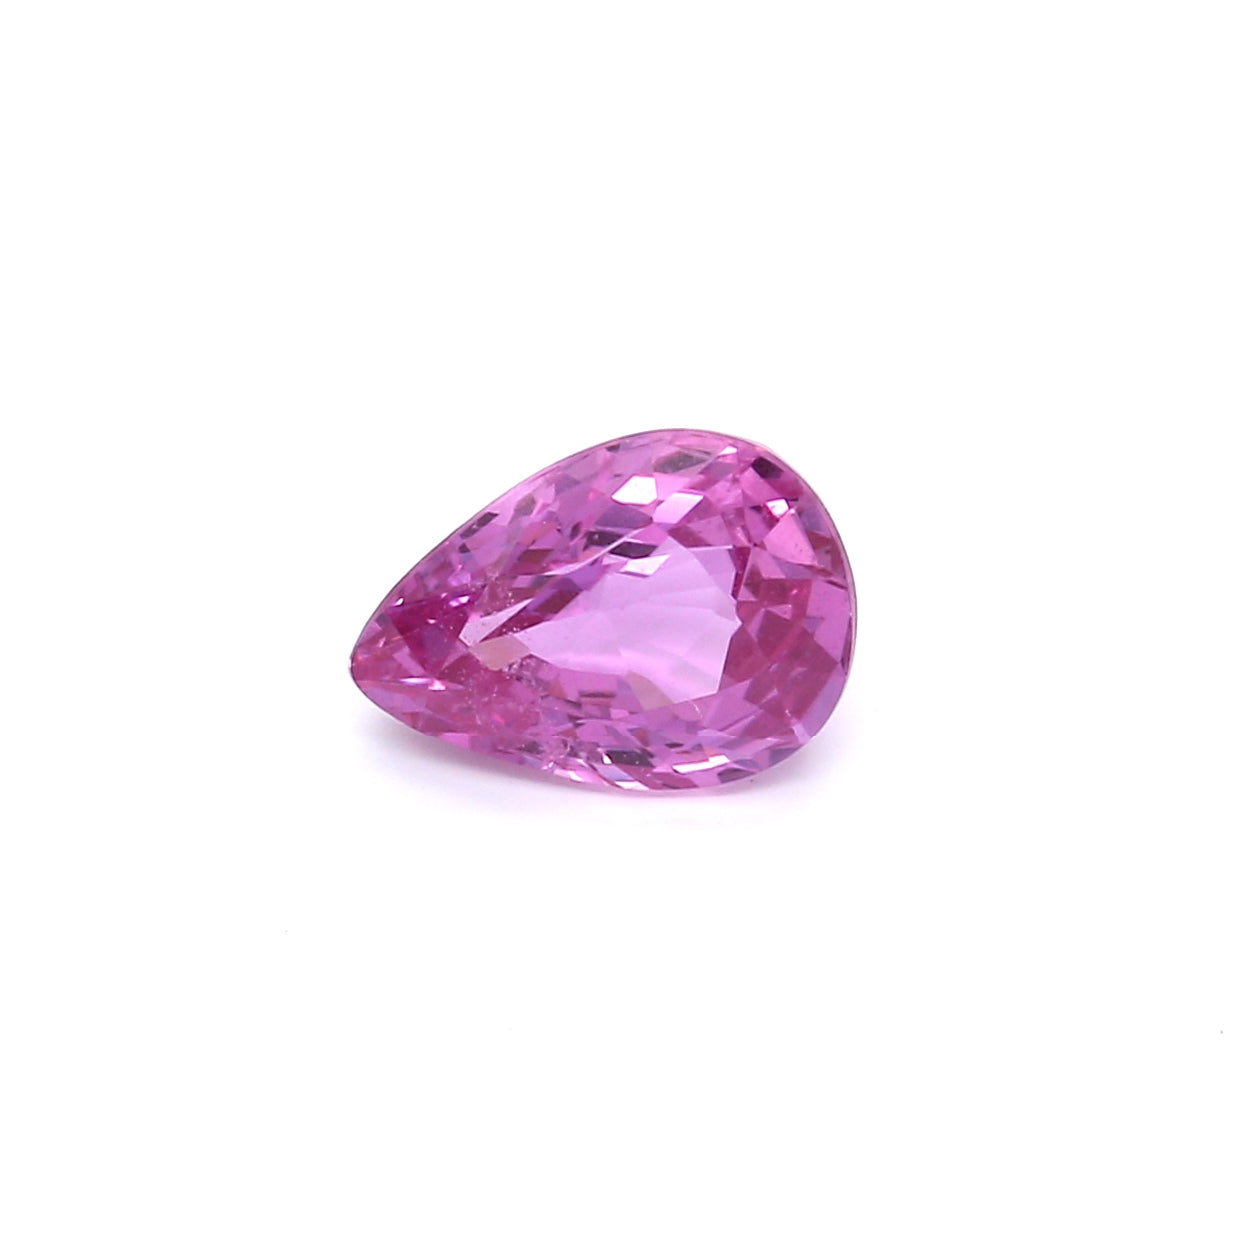 2.15ct Purplish Pink, Pear Shape Sapphire, Heated, Madagascar - 9.05 x 6.57 x 4.44mm